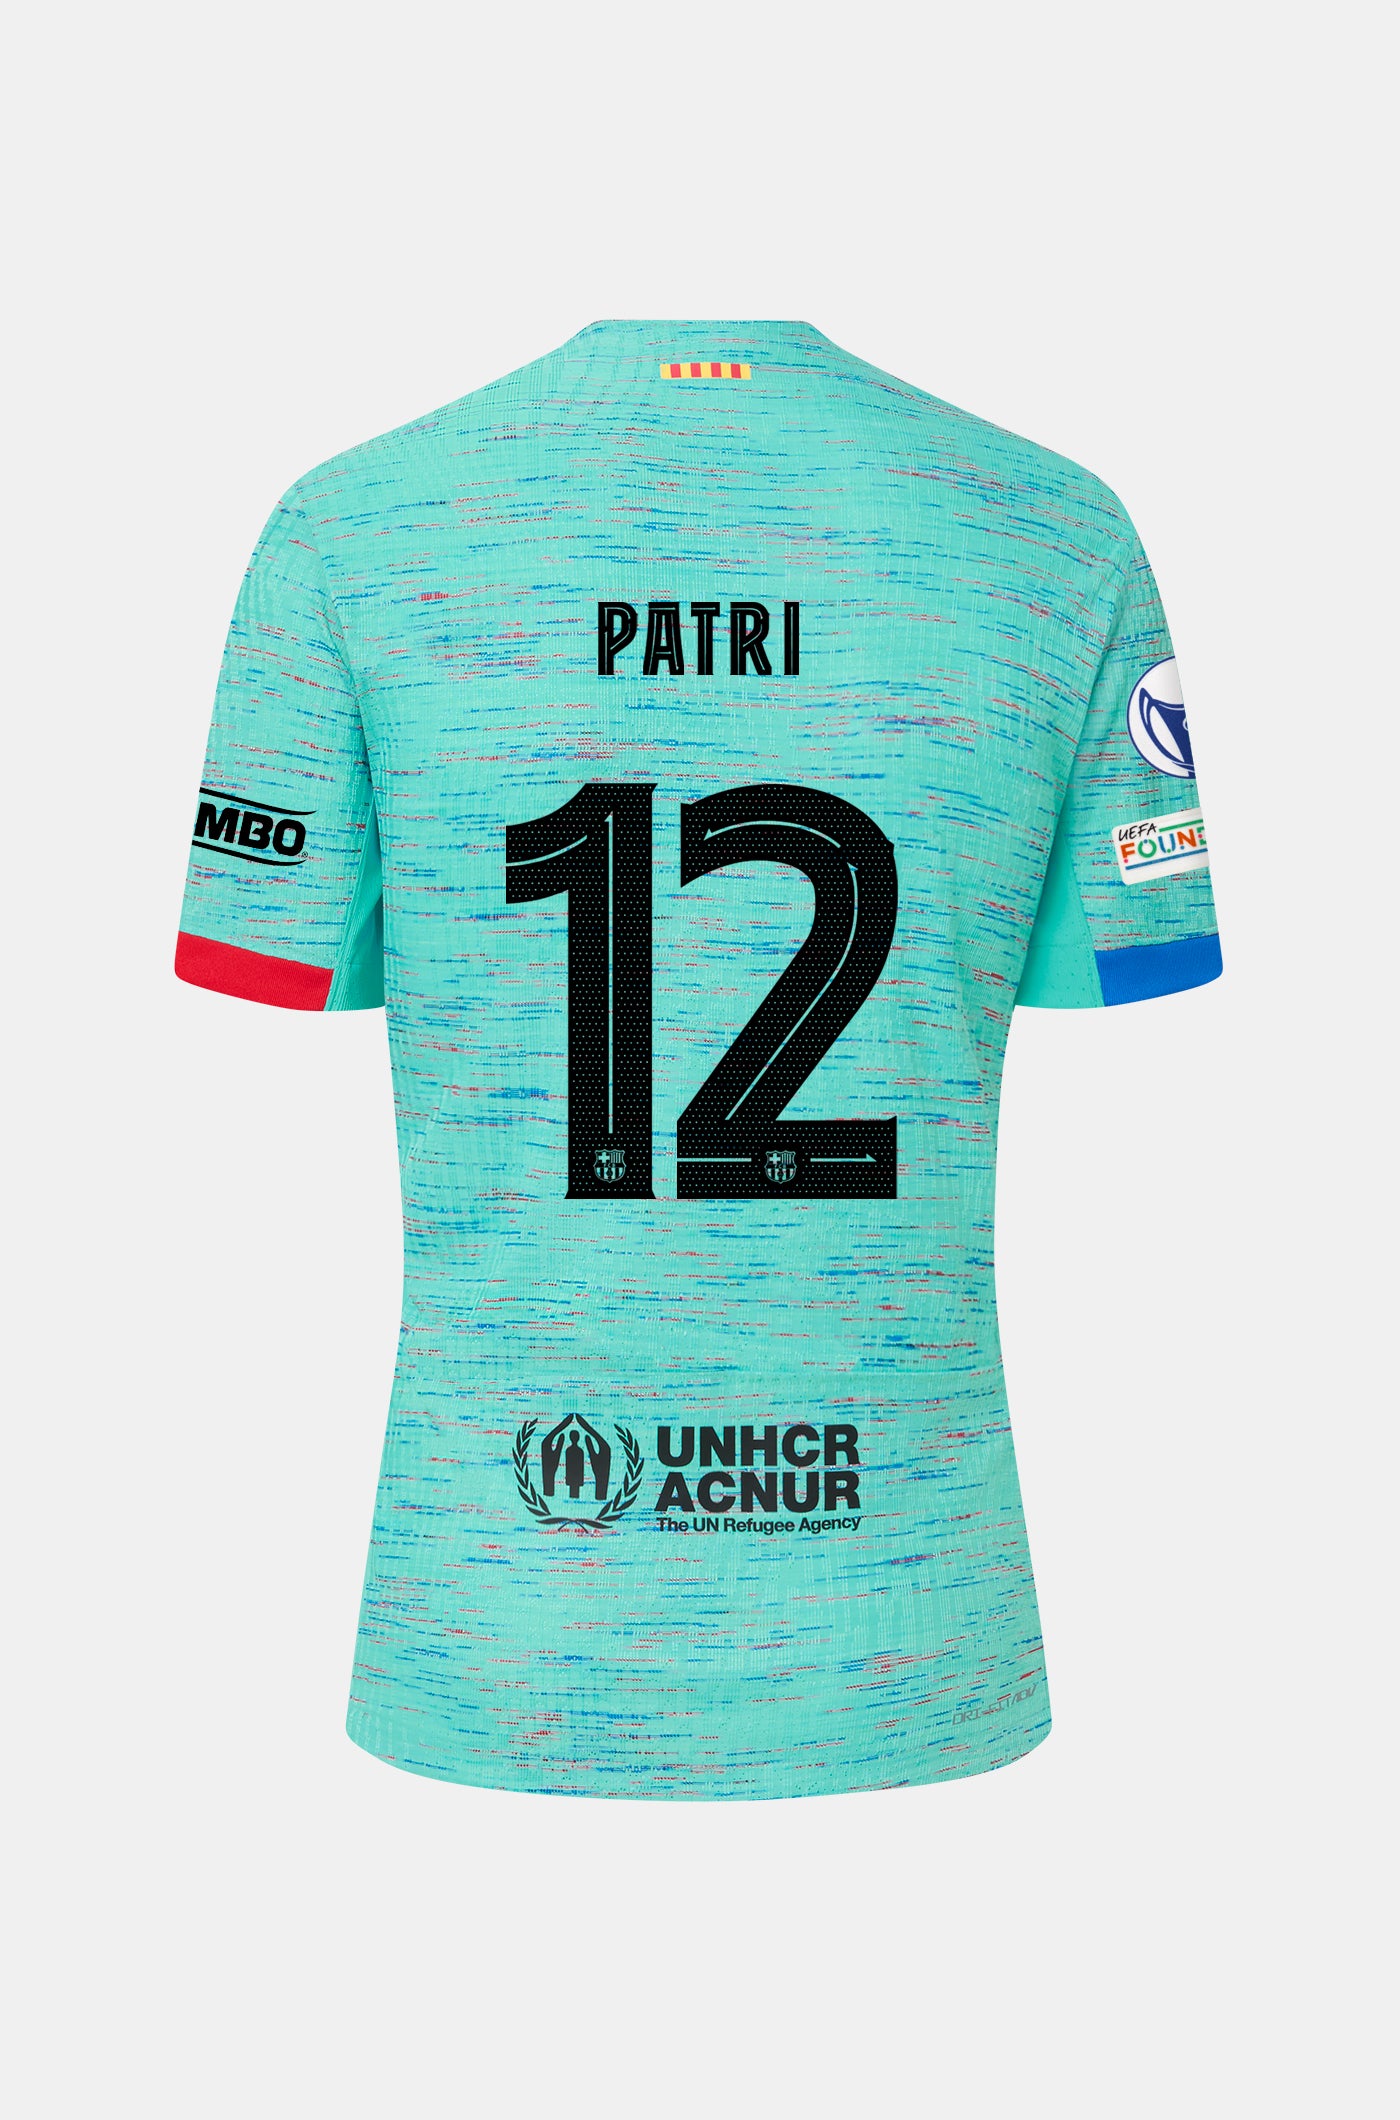 UWCL FC Barcelona third shirt 23/24 – Men - PATRI